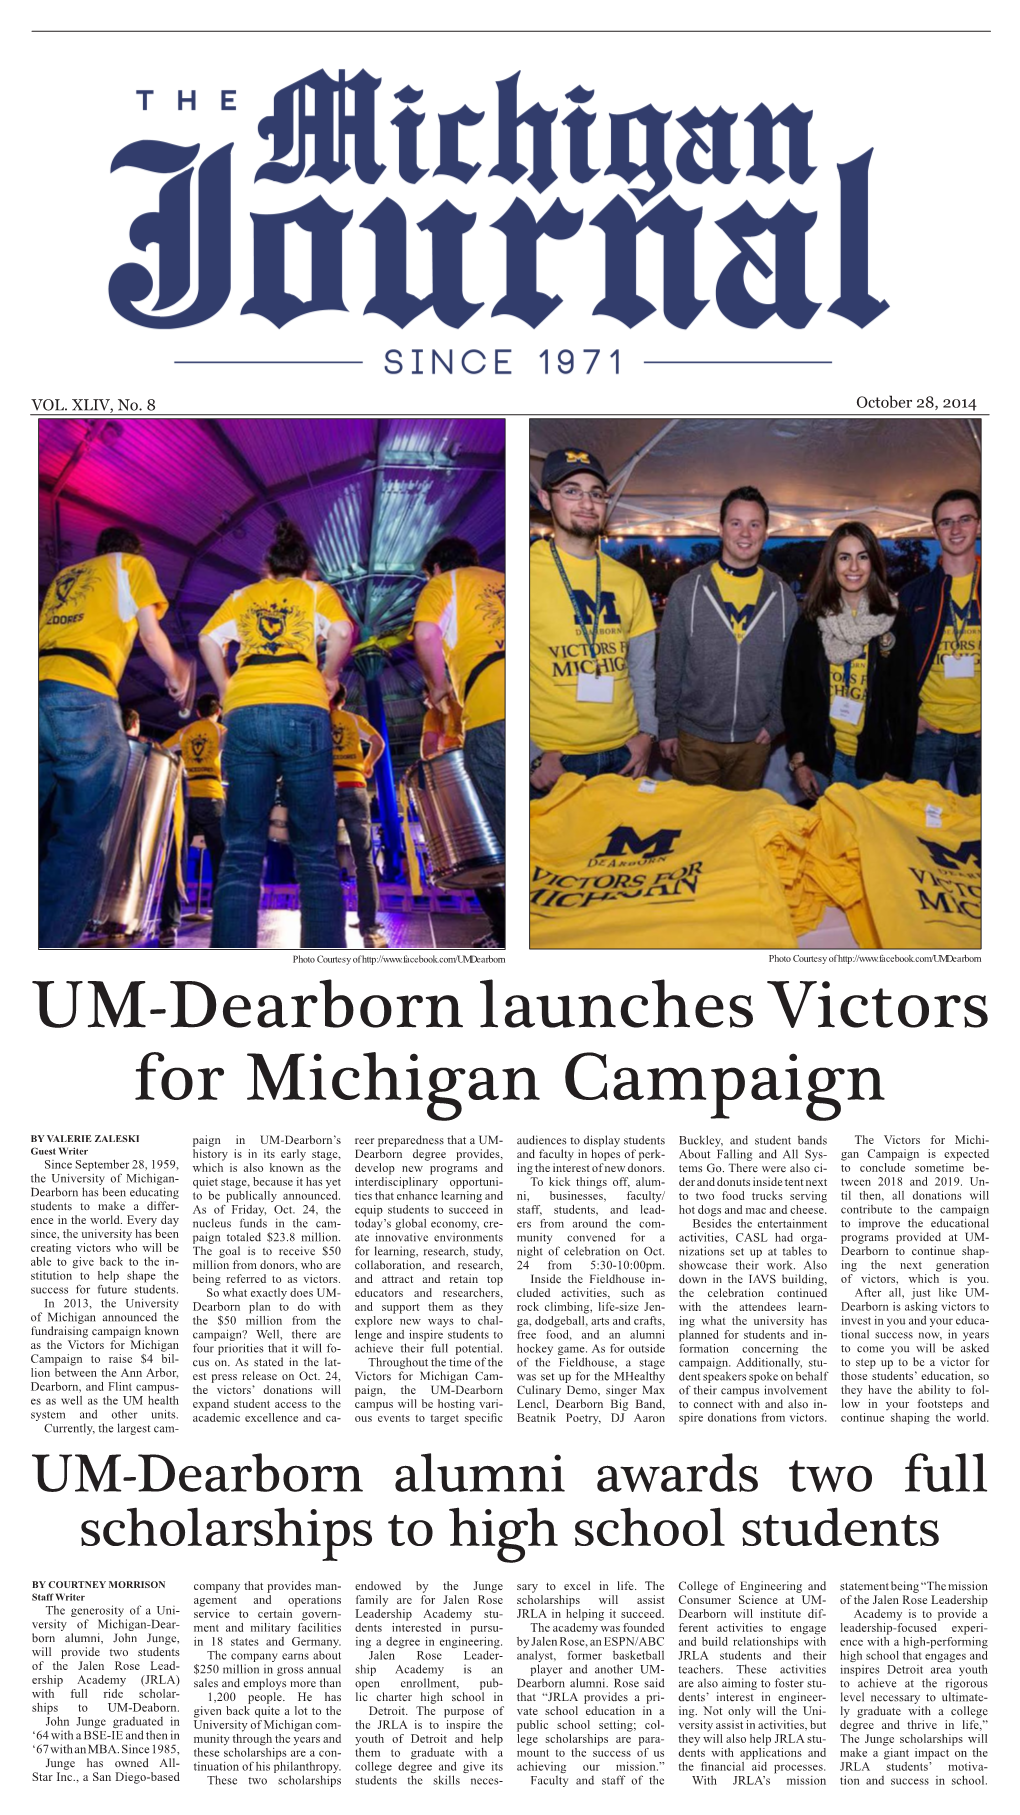 UM-Dearborn Launches Victors for Michigan Campaign